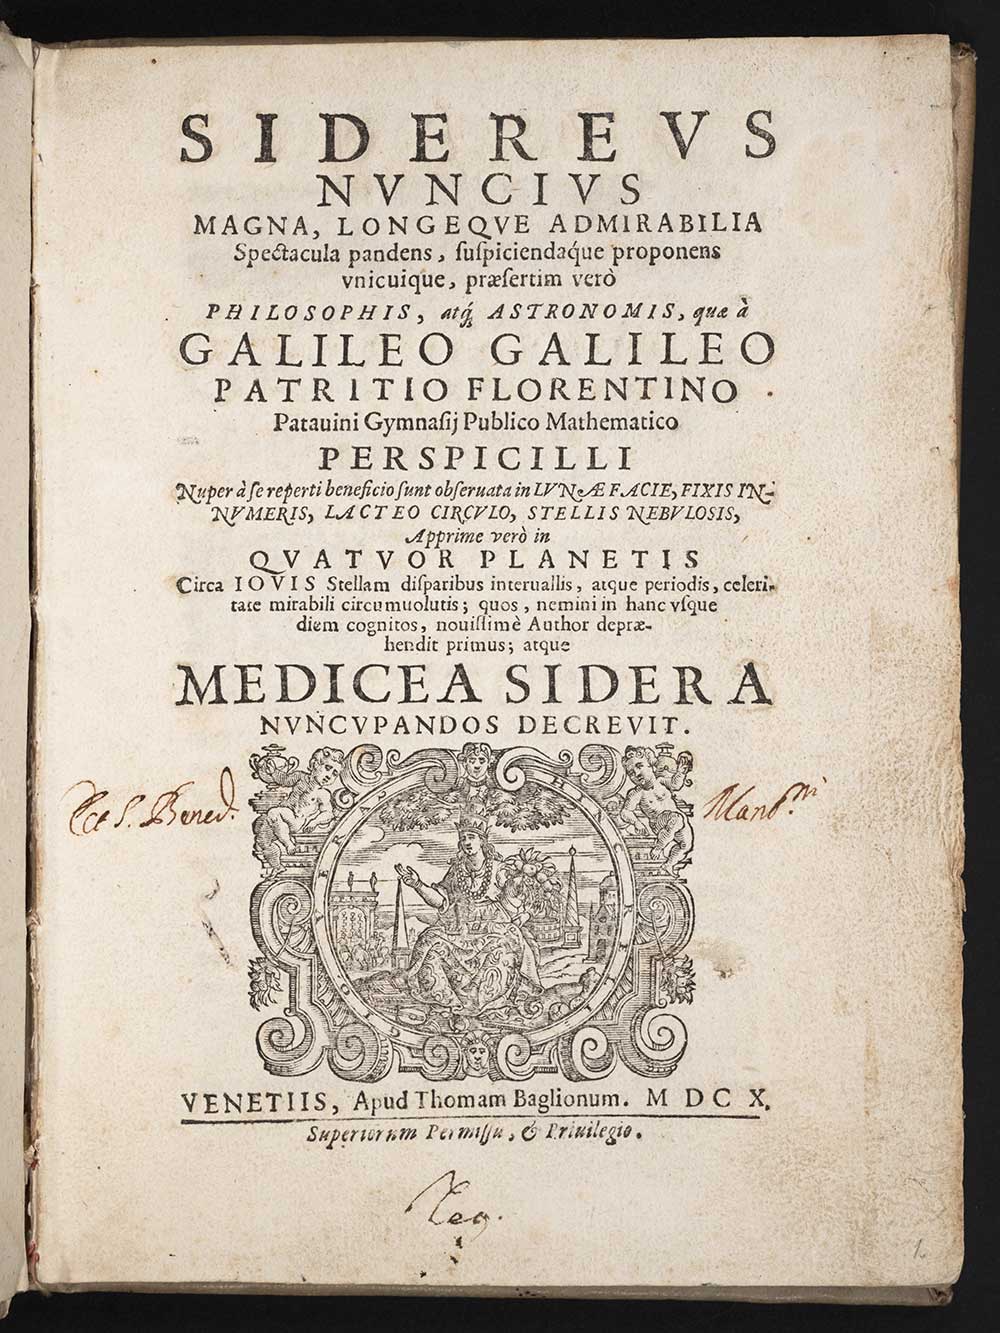 Title page, fine paper issue, Venice edition, Sidereus Nuncius